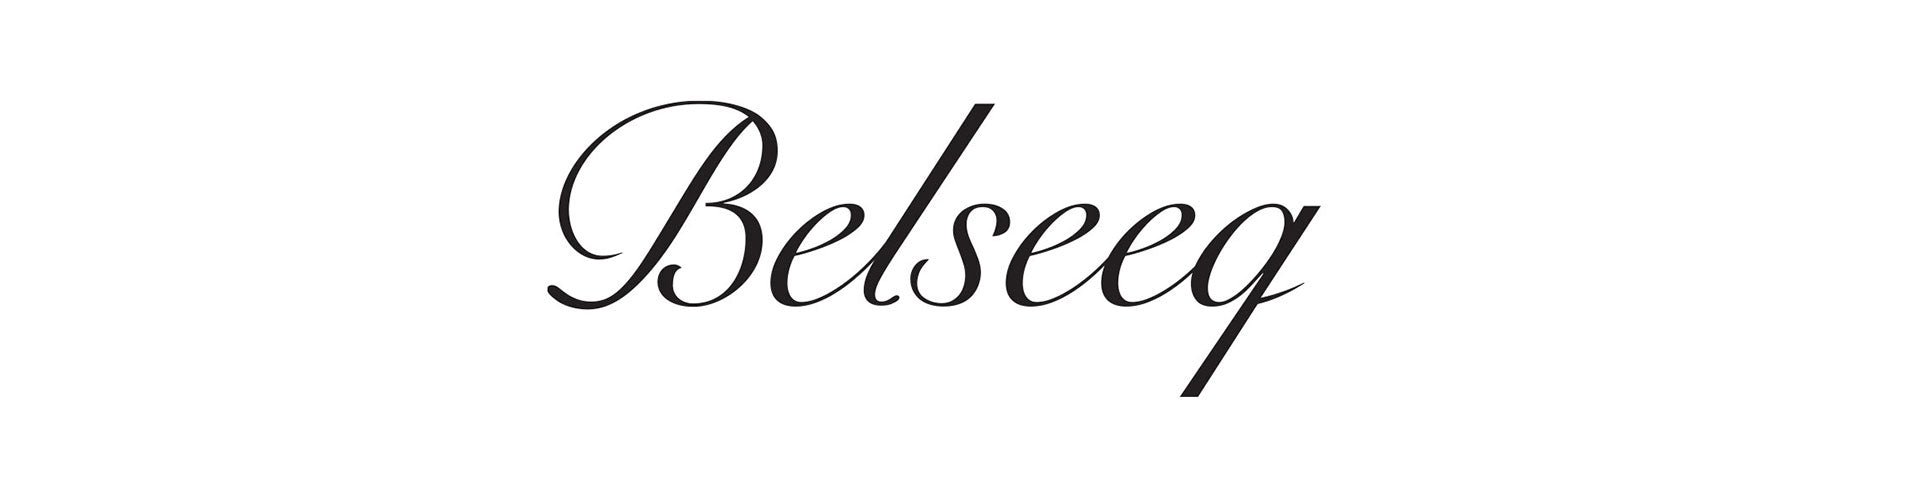 Belseeq